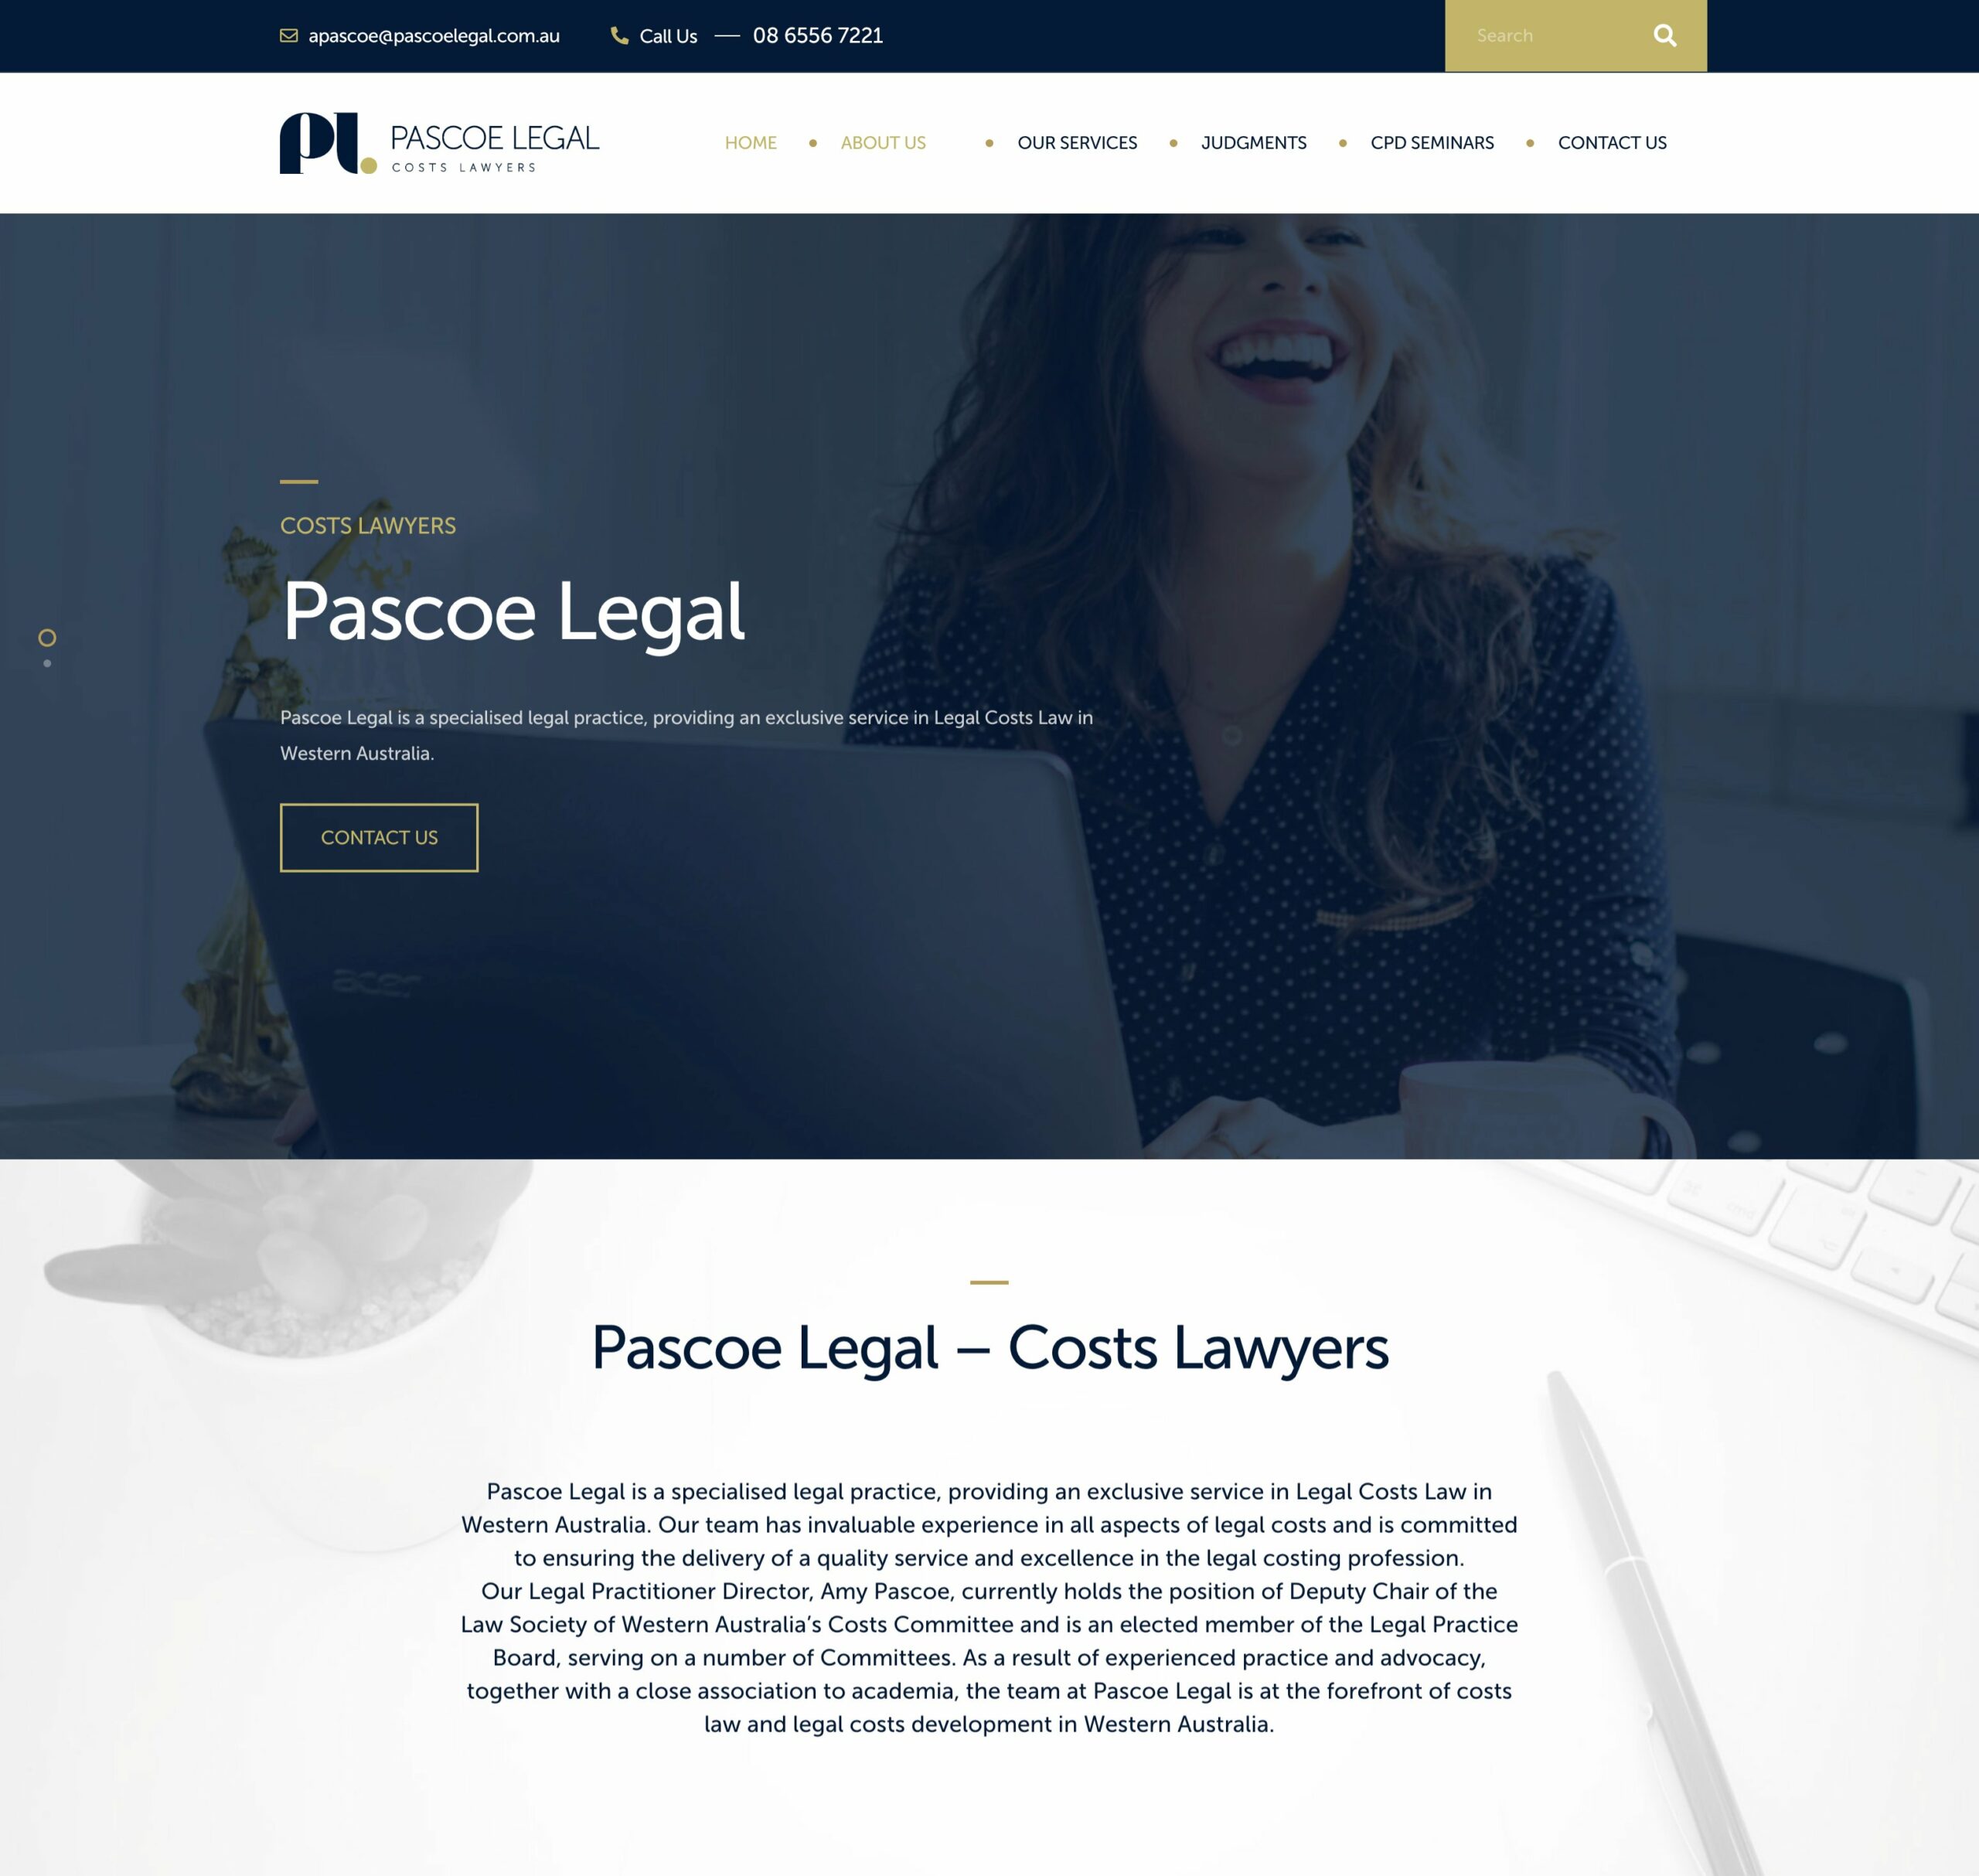 Pascoe Legal website